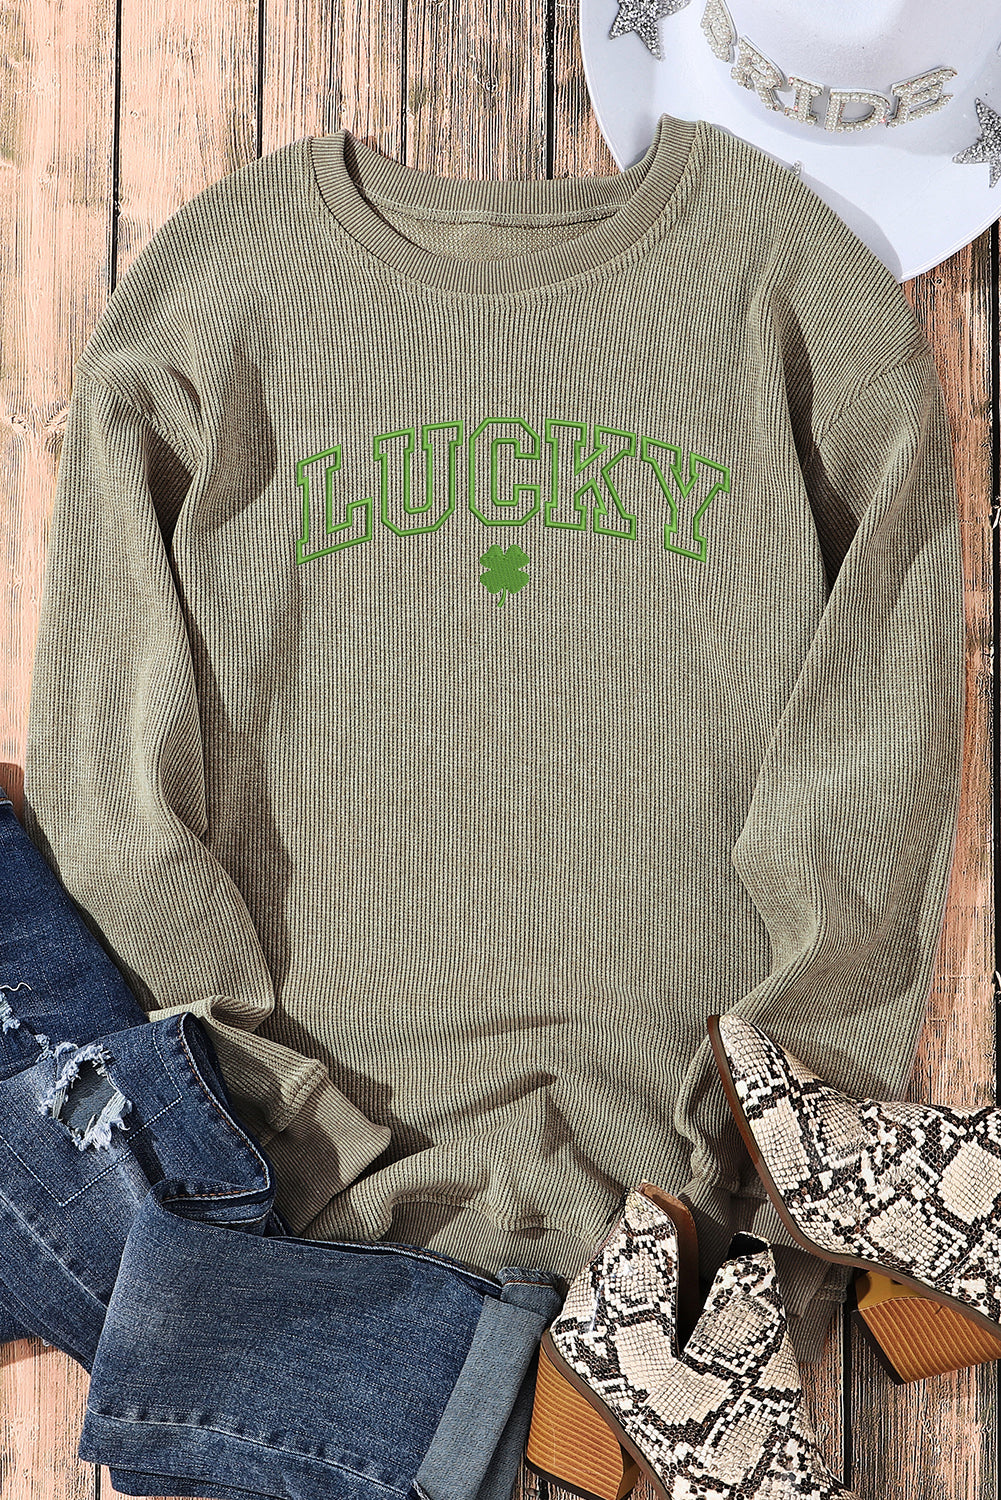 Green LUCKY Clover Embroidered Corded Crewneck Sweatshirt Graphic Sweatshirts JT's Designer Fashion